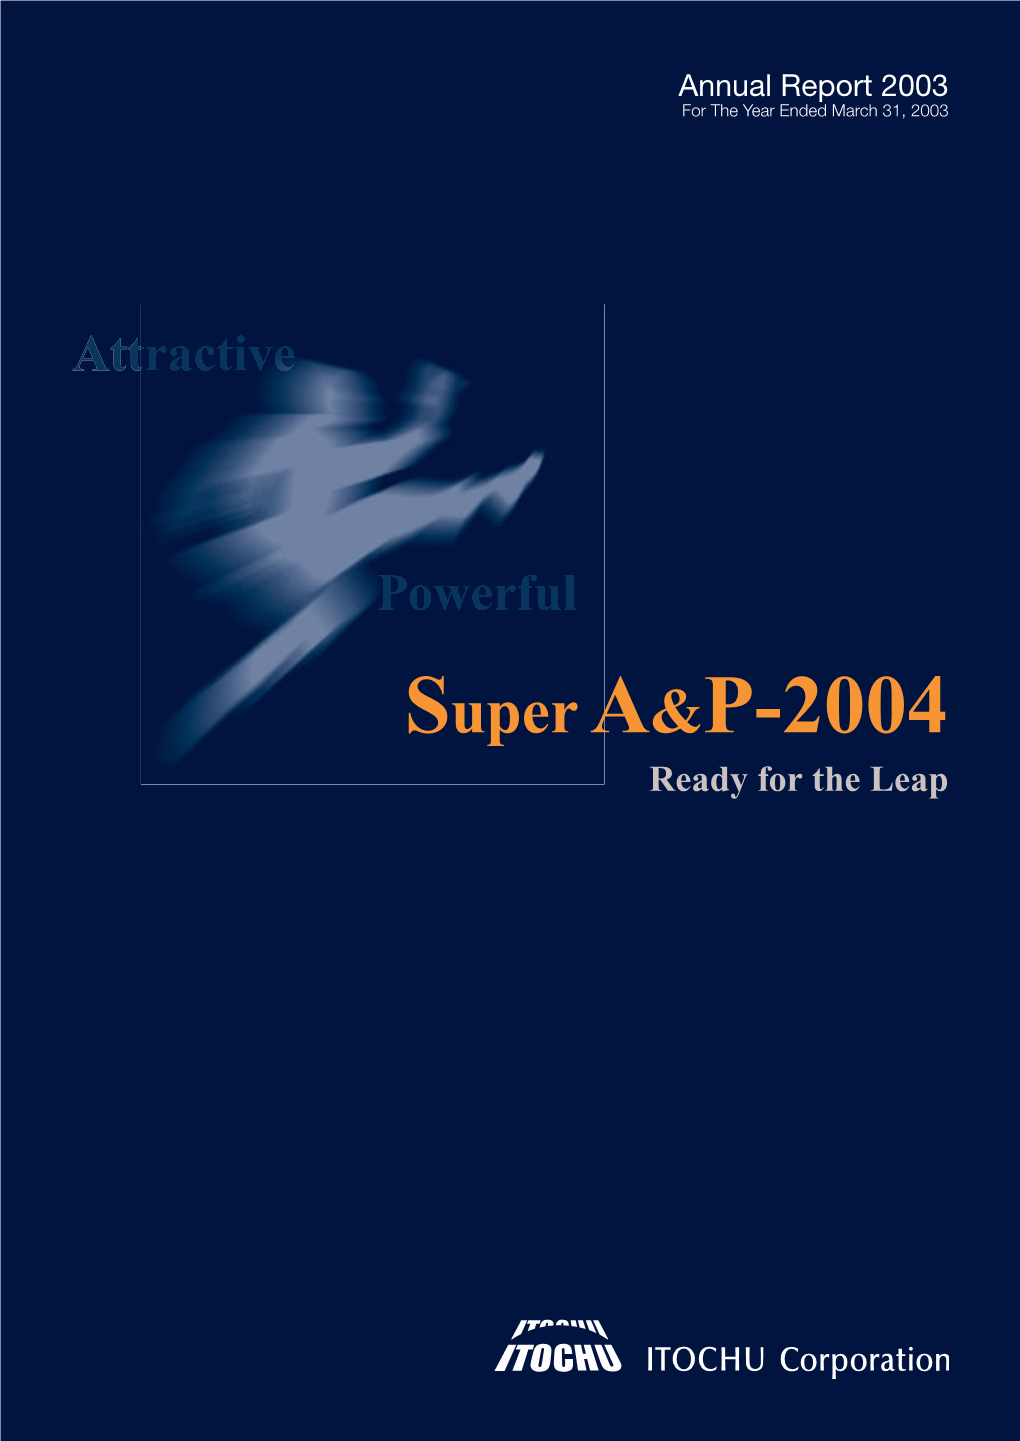 Super A&P-2004